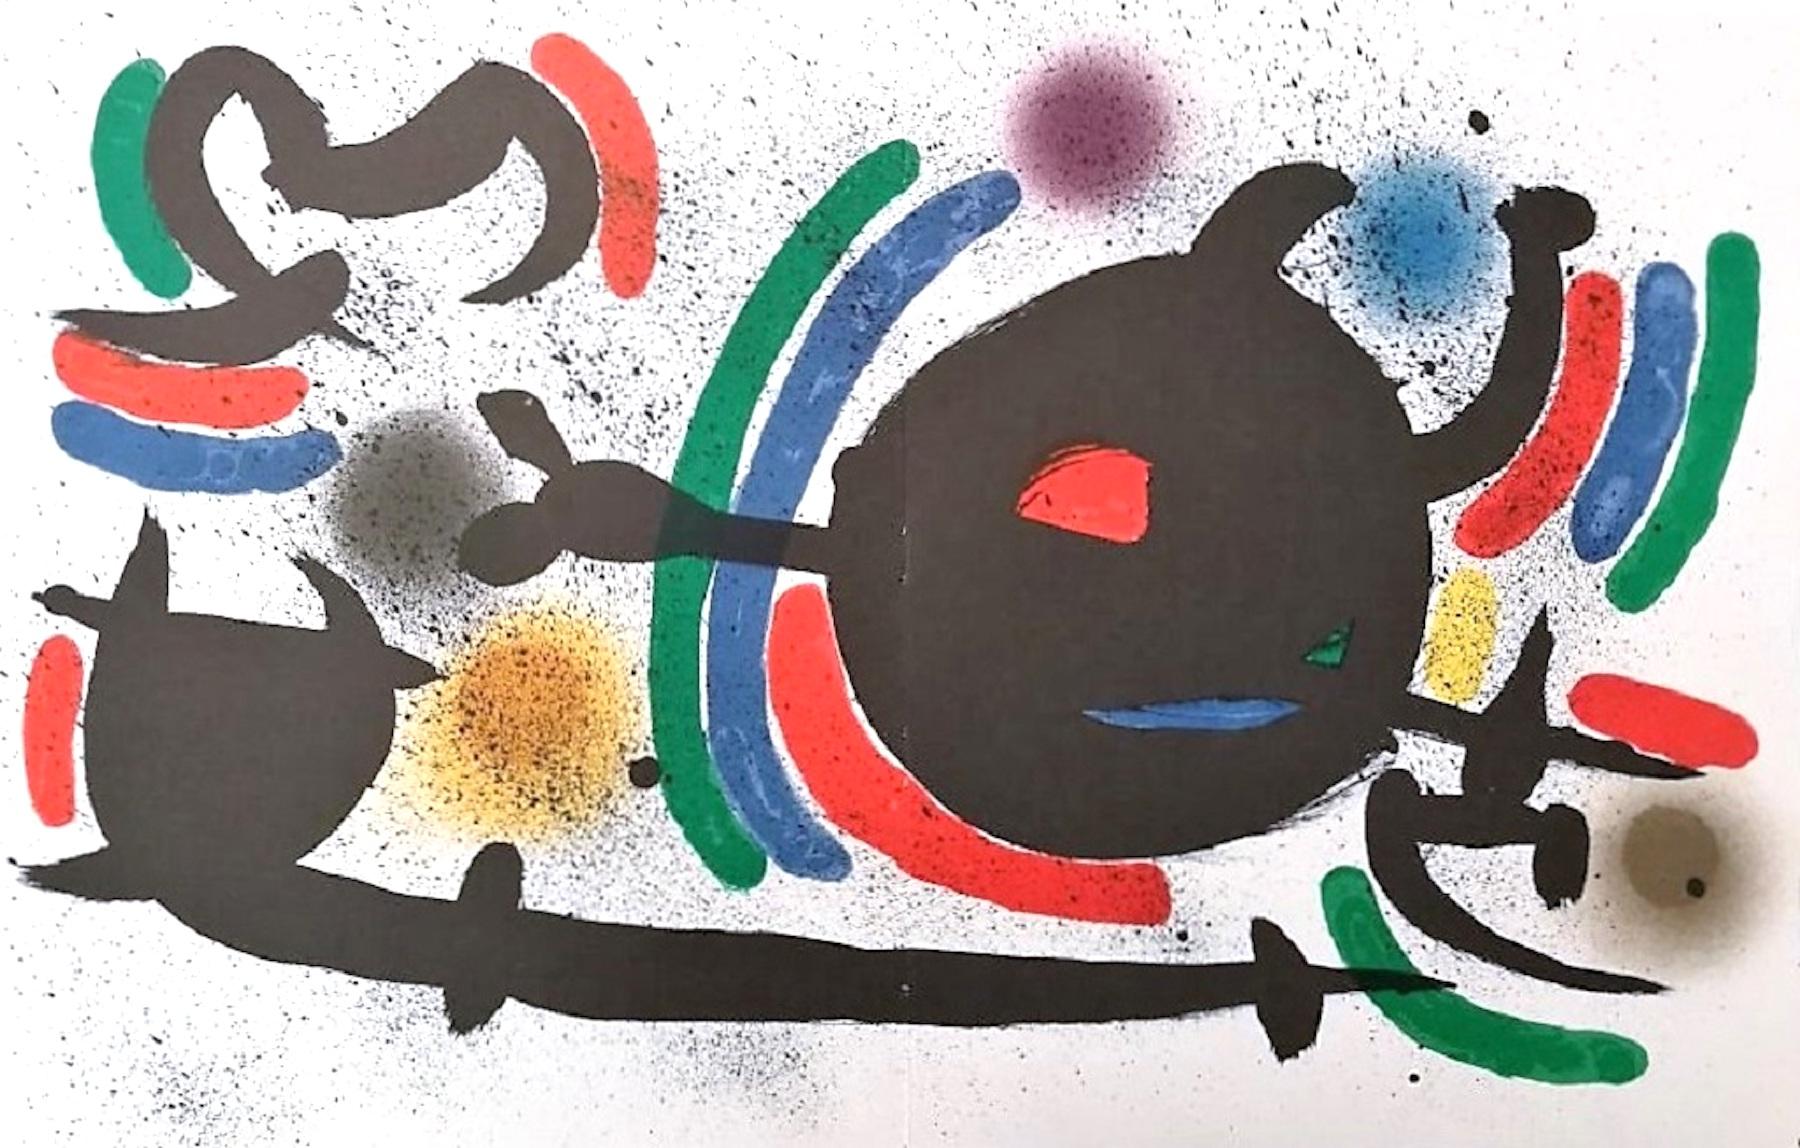 Joan Miró Abstract Print - Mirò Lithographe I - Plate X